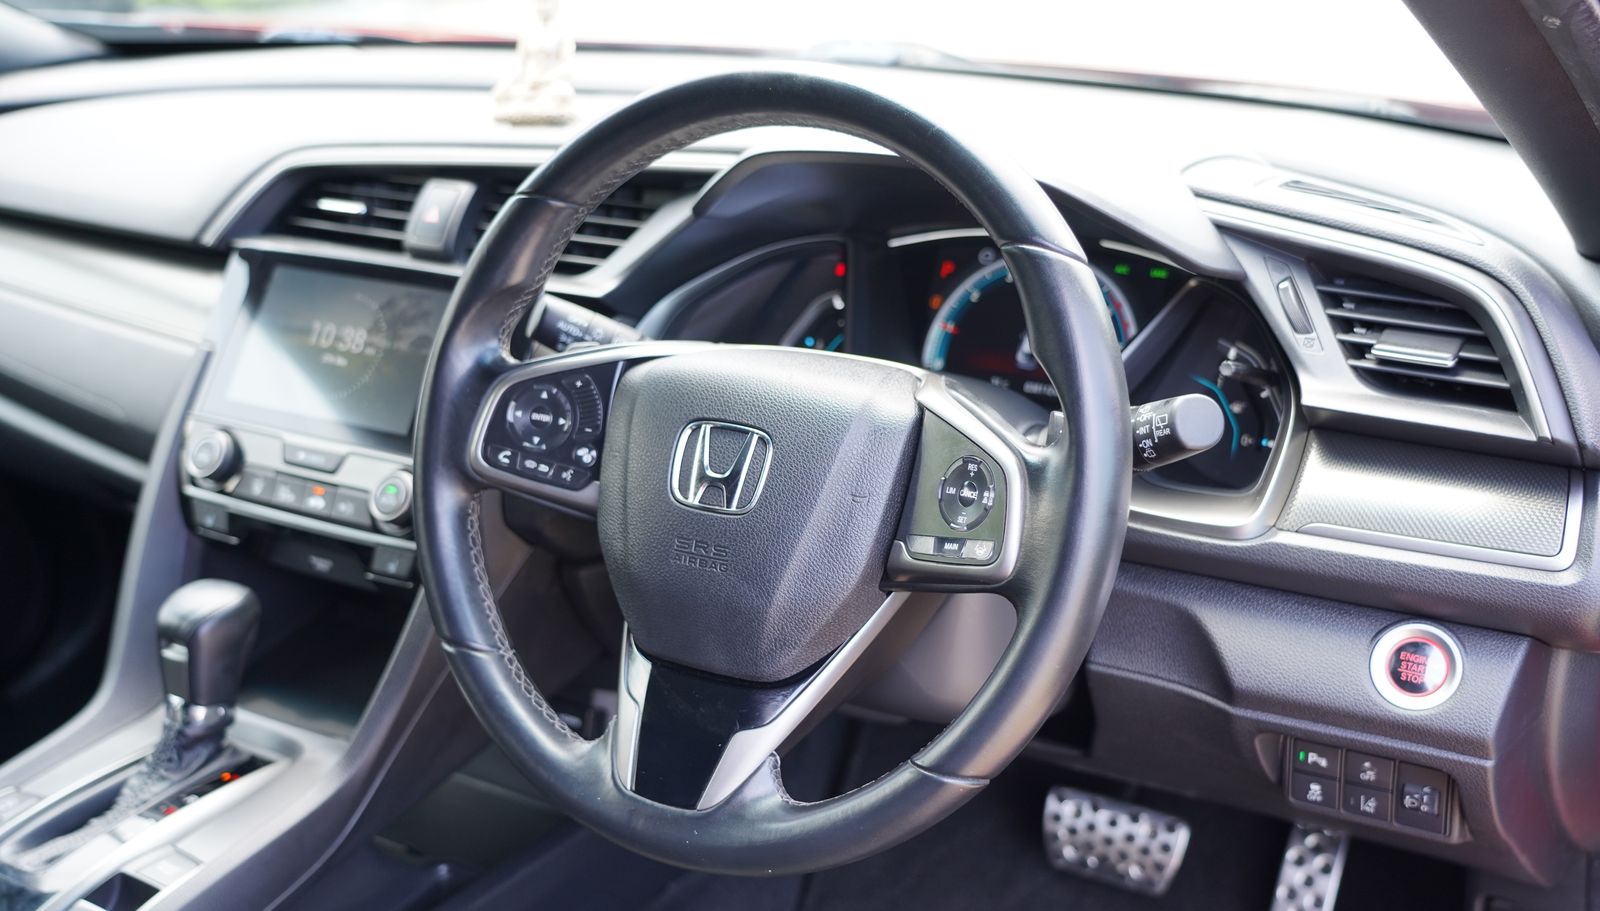 Honda Civic steering wheel + dashboard